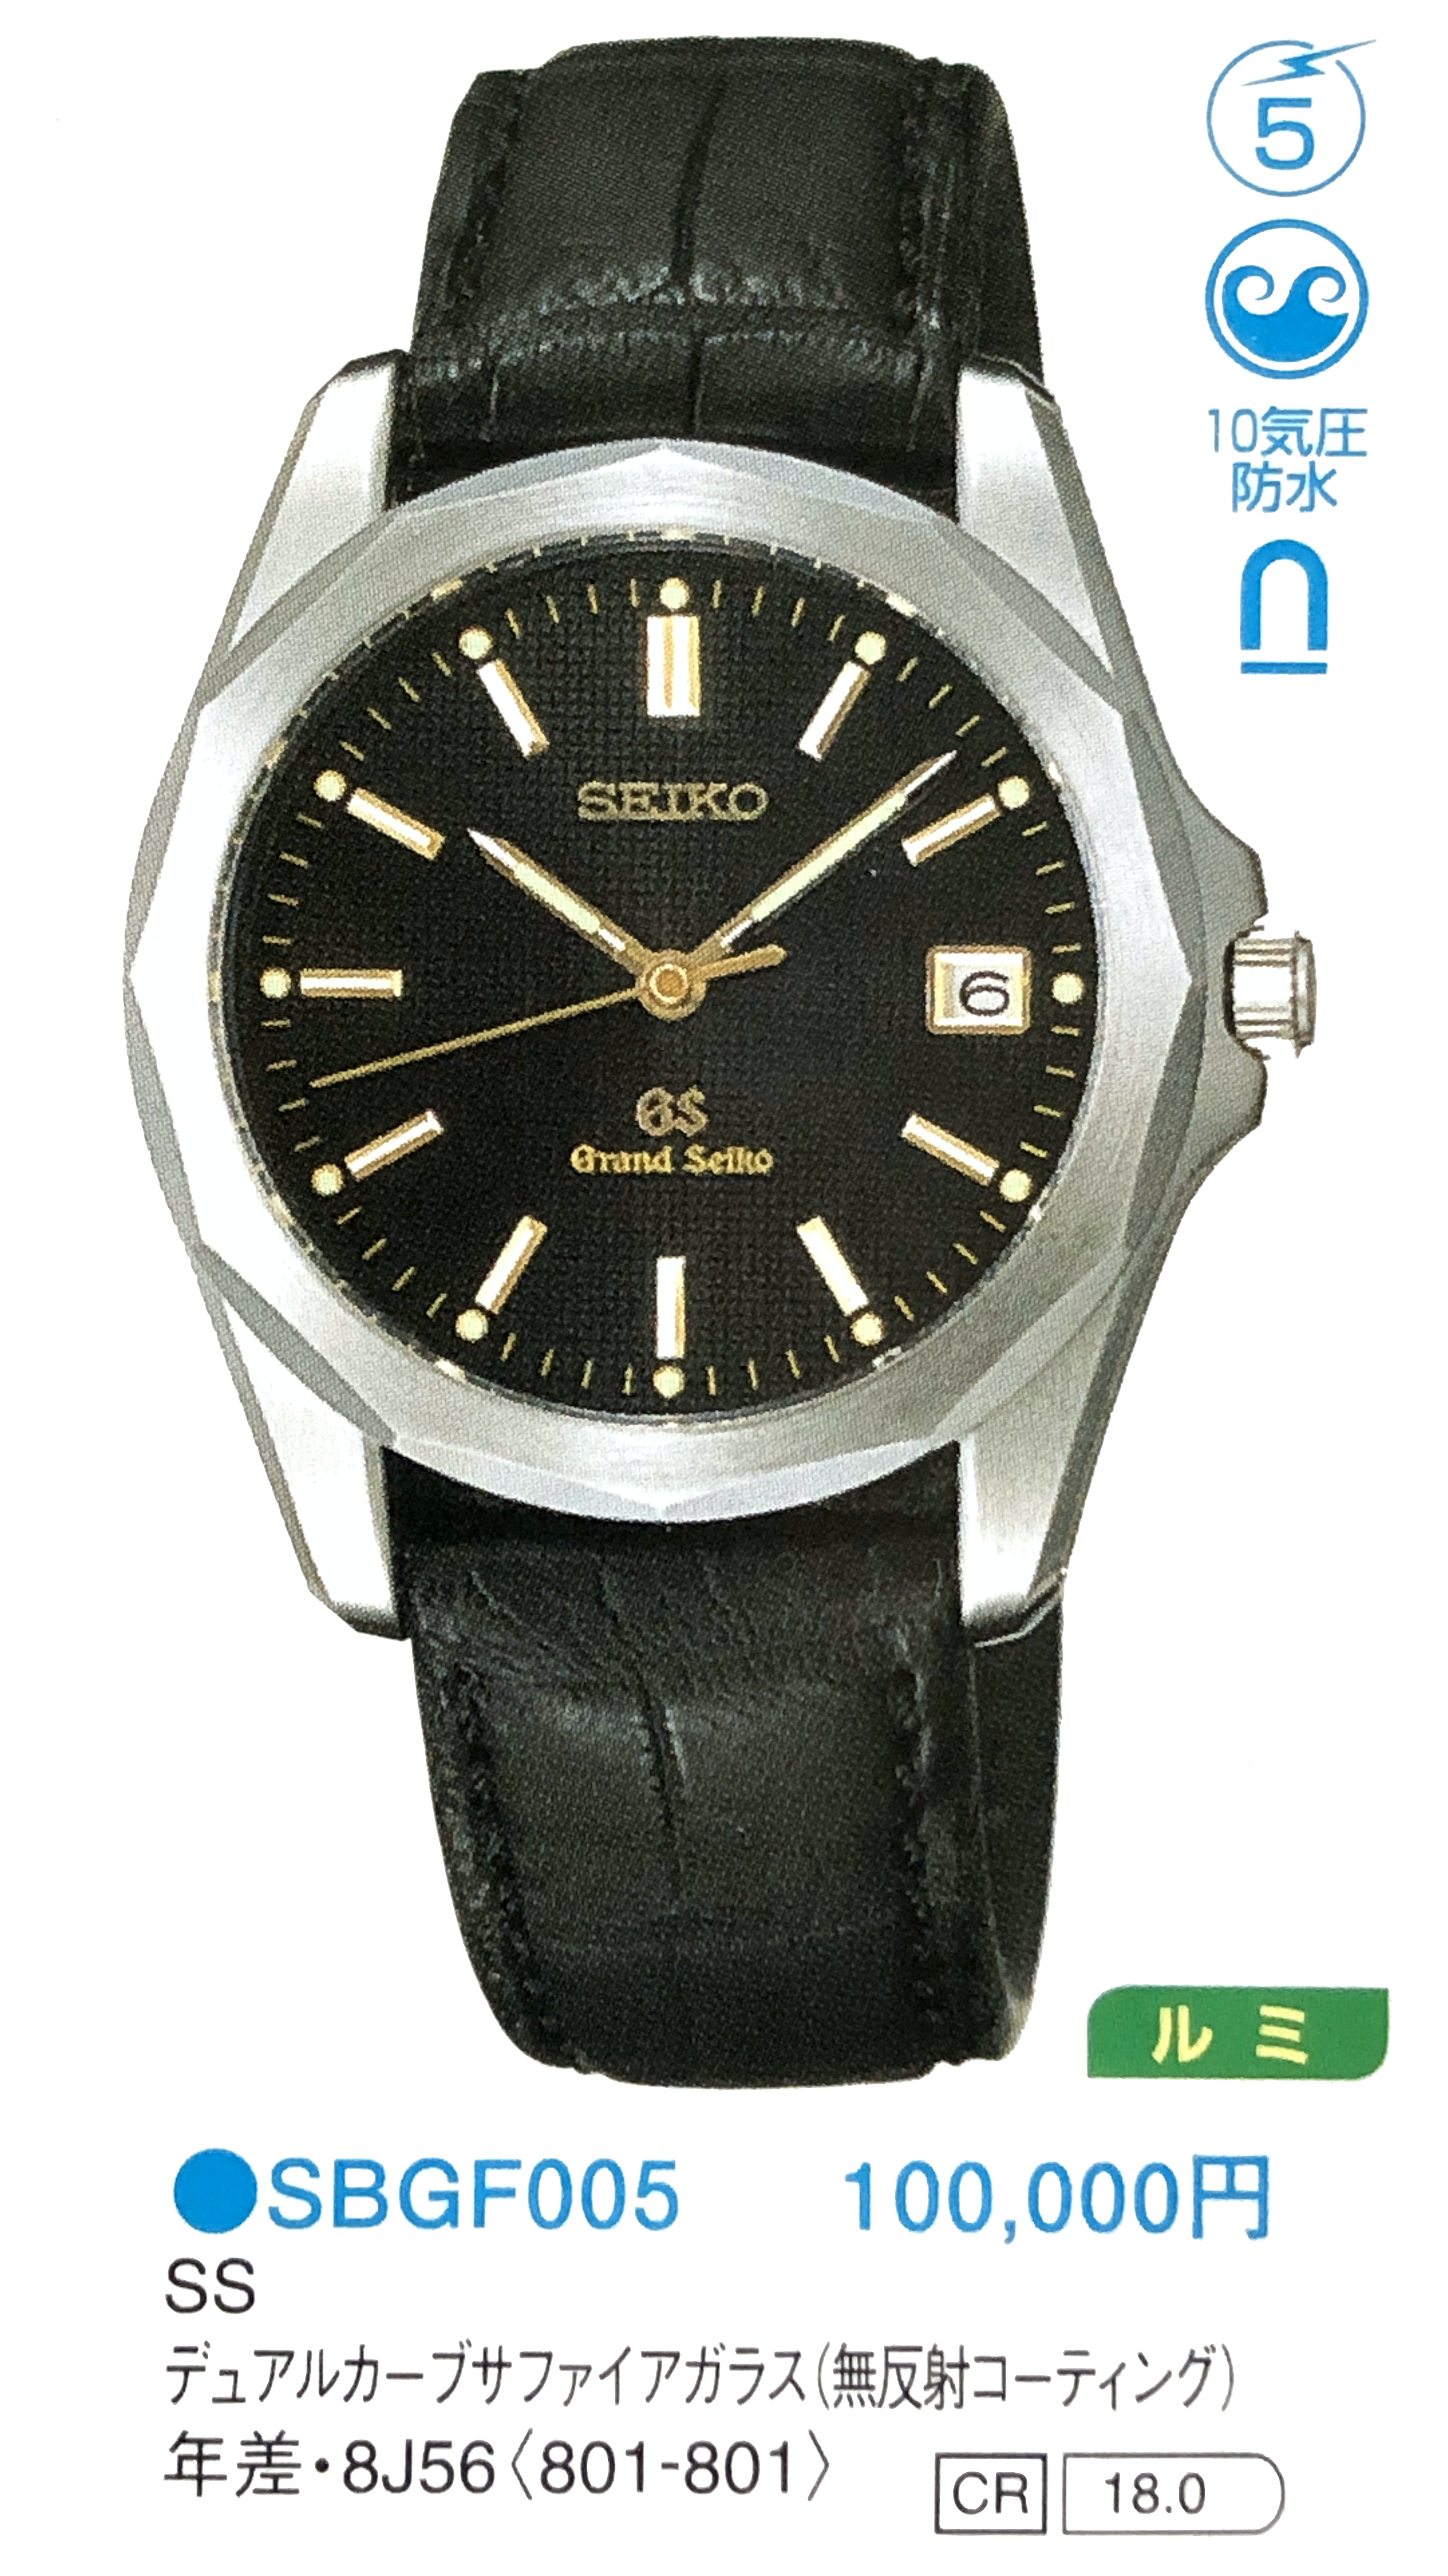 Grand Seiko 8J55-8010 SBGF005 (Sold)